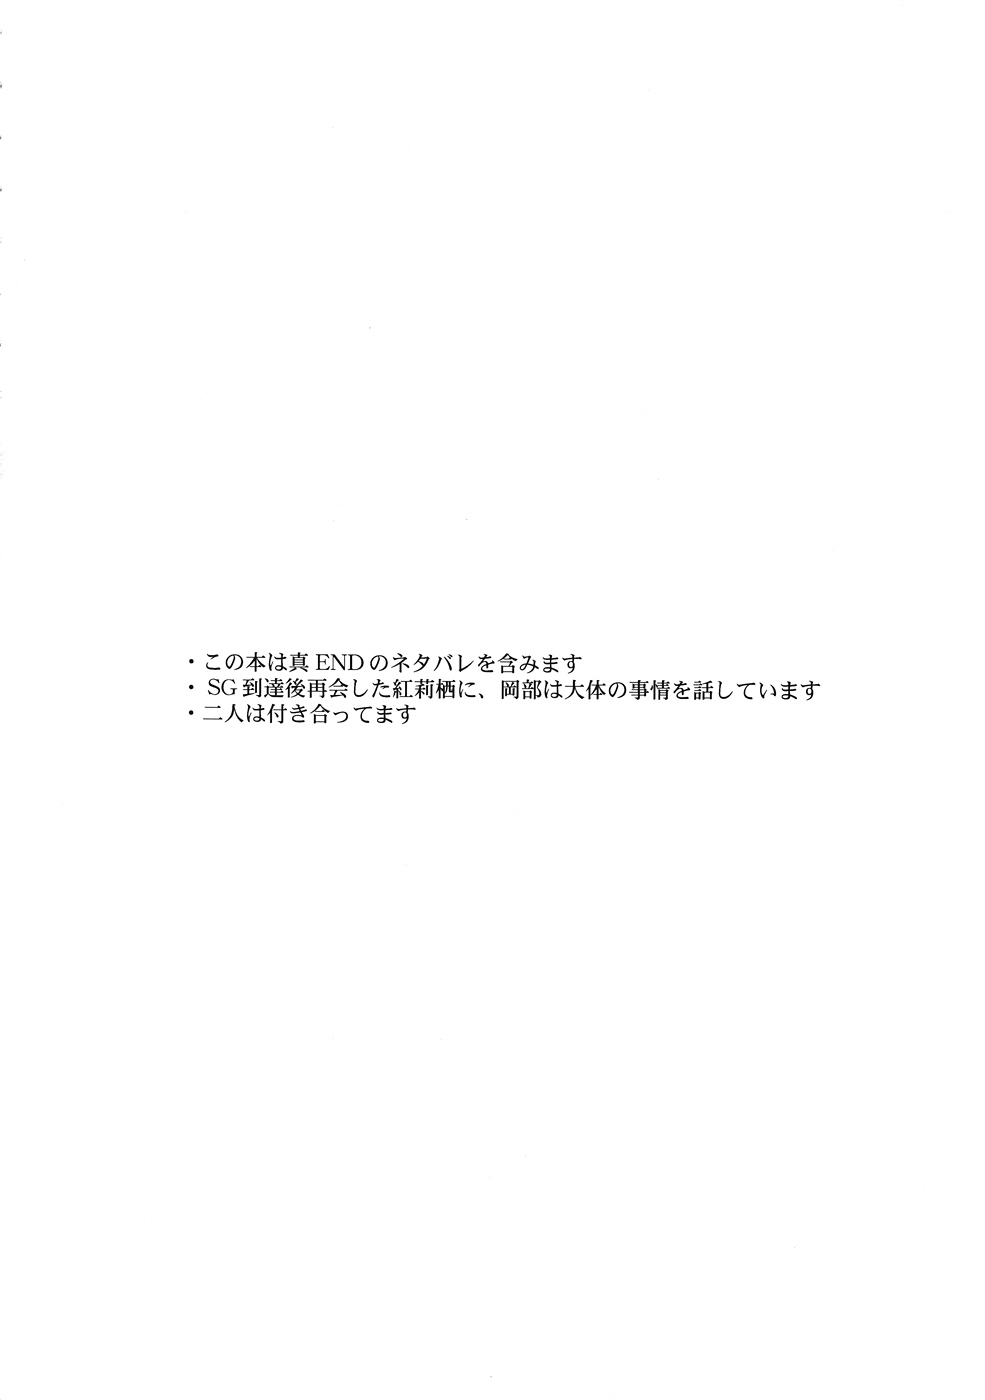 (C81) [我儘堂 (翔丸、NIO)] Sitainsu；Kedo シタインス・ケード 02 (シュタインズゲート)